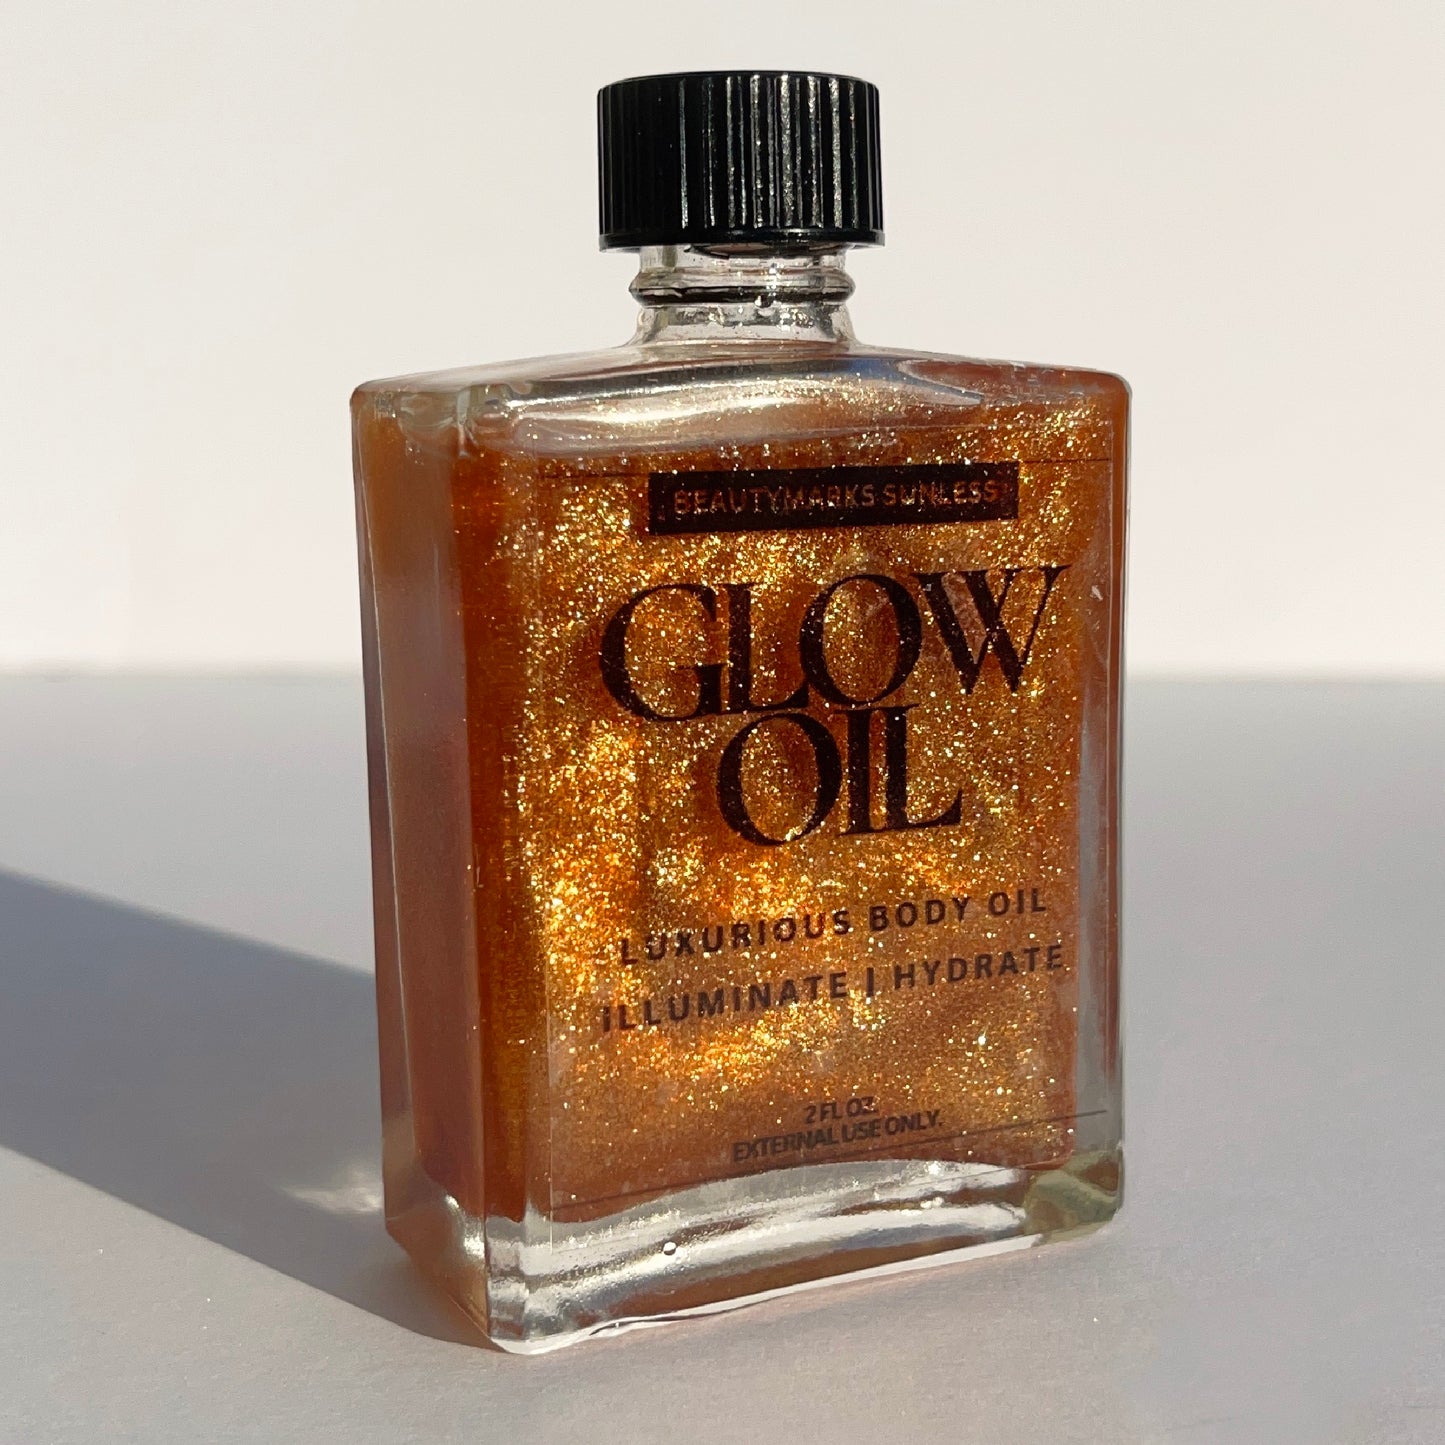 Glow Oil: Luxurious Body Oil